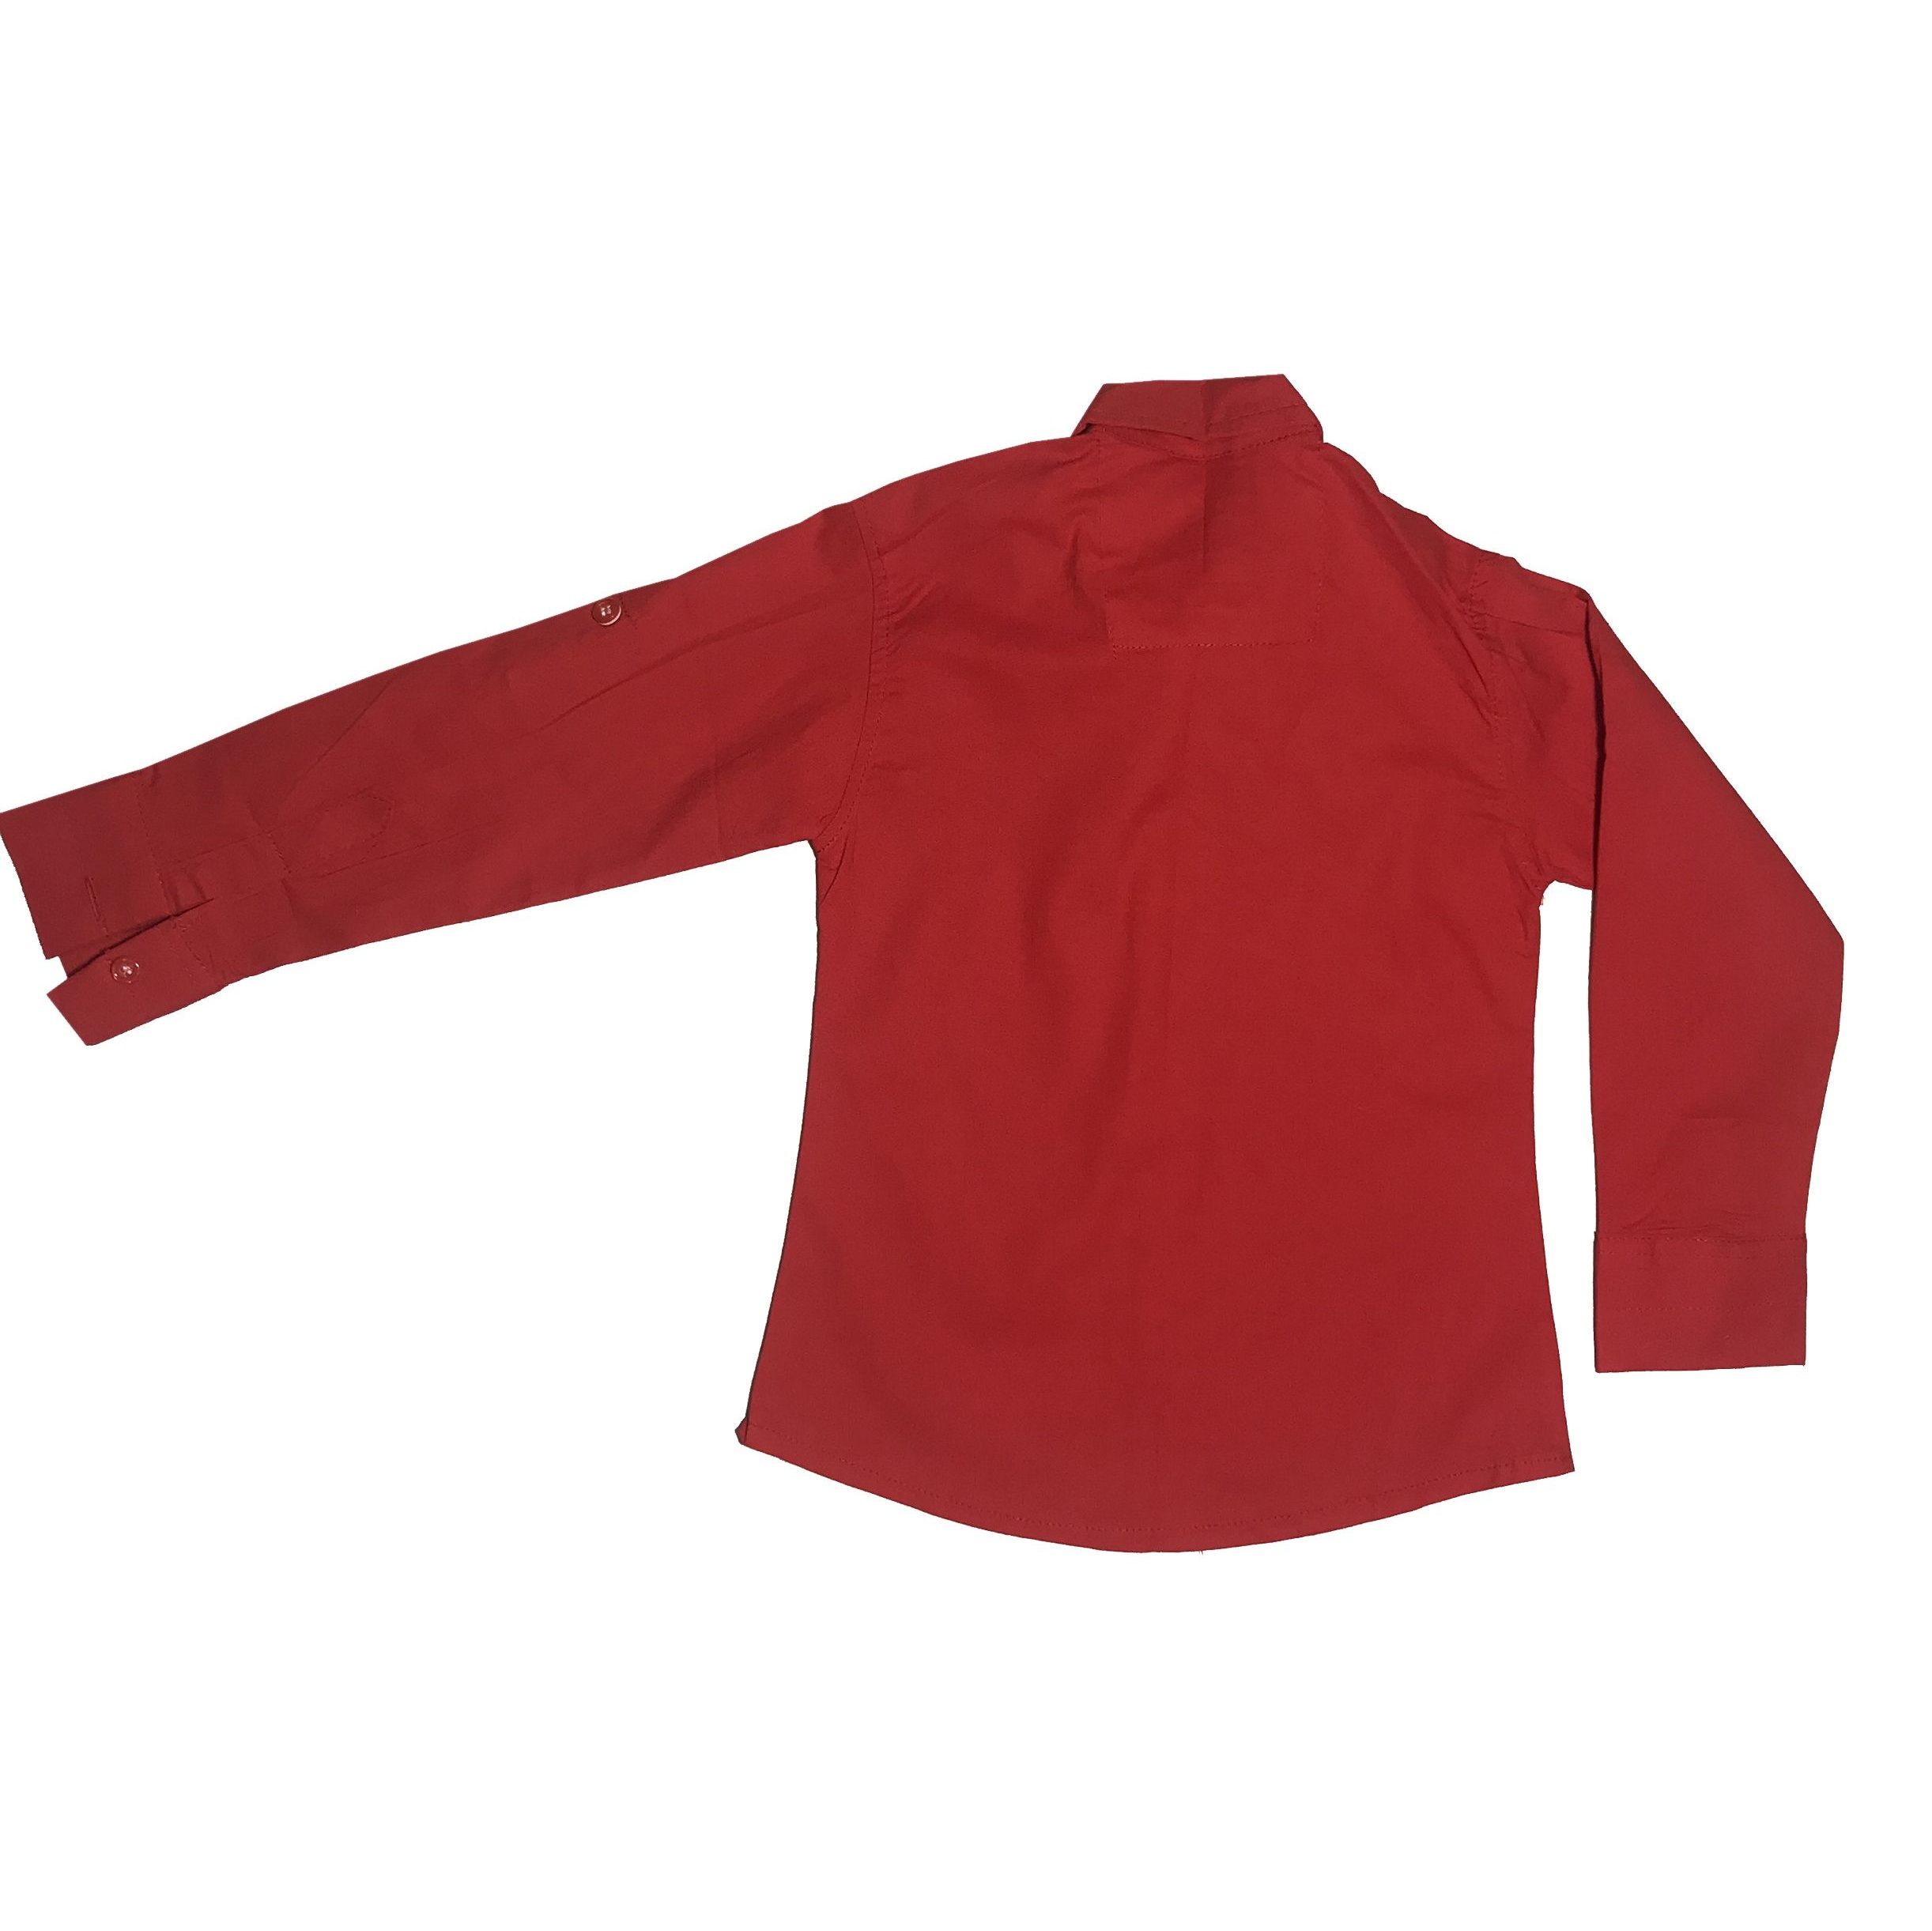 پیراهن پسرانه کد Sh-101 رنگ قرمز